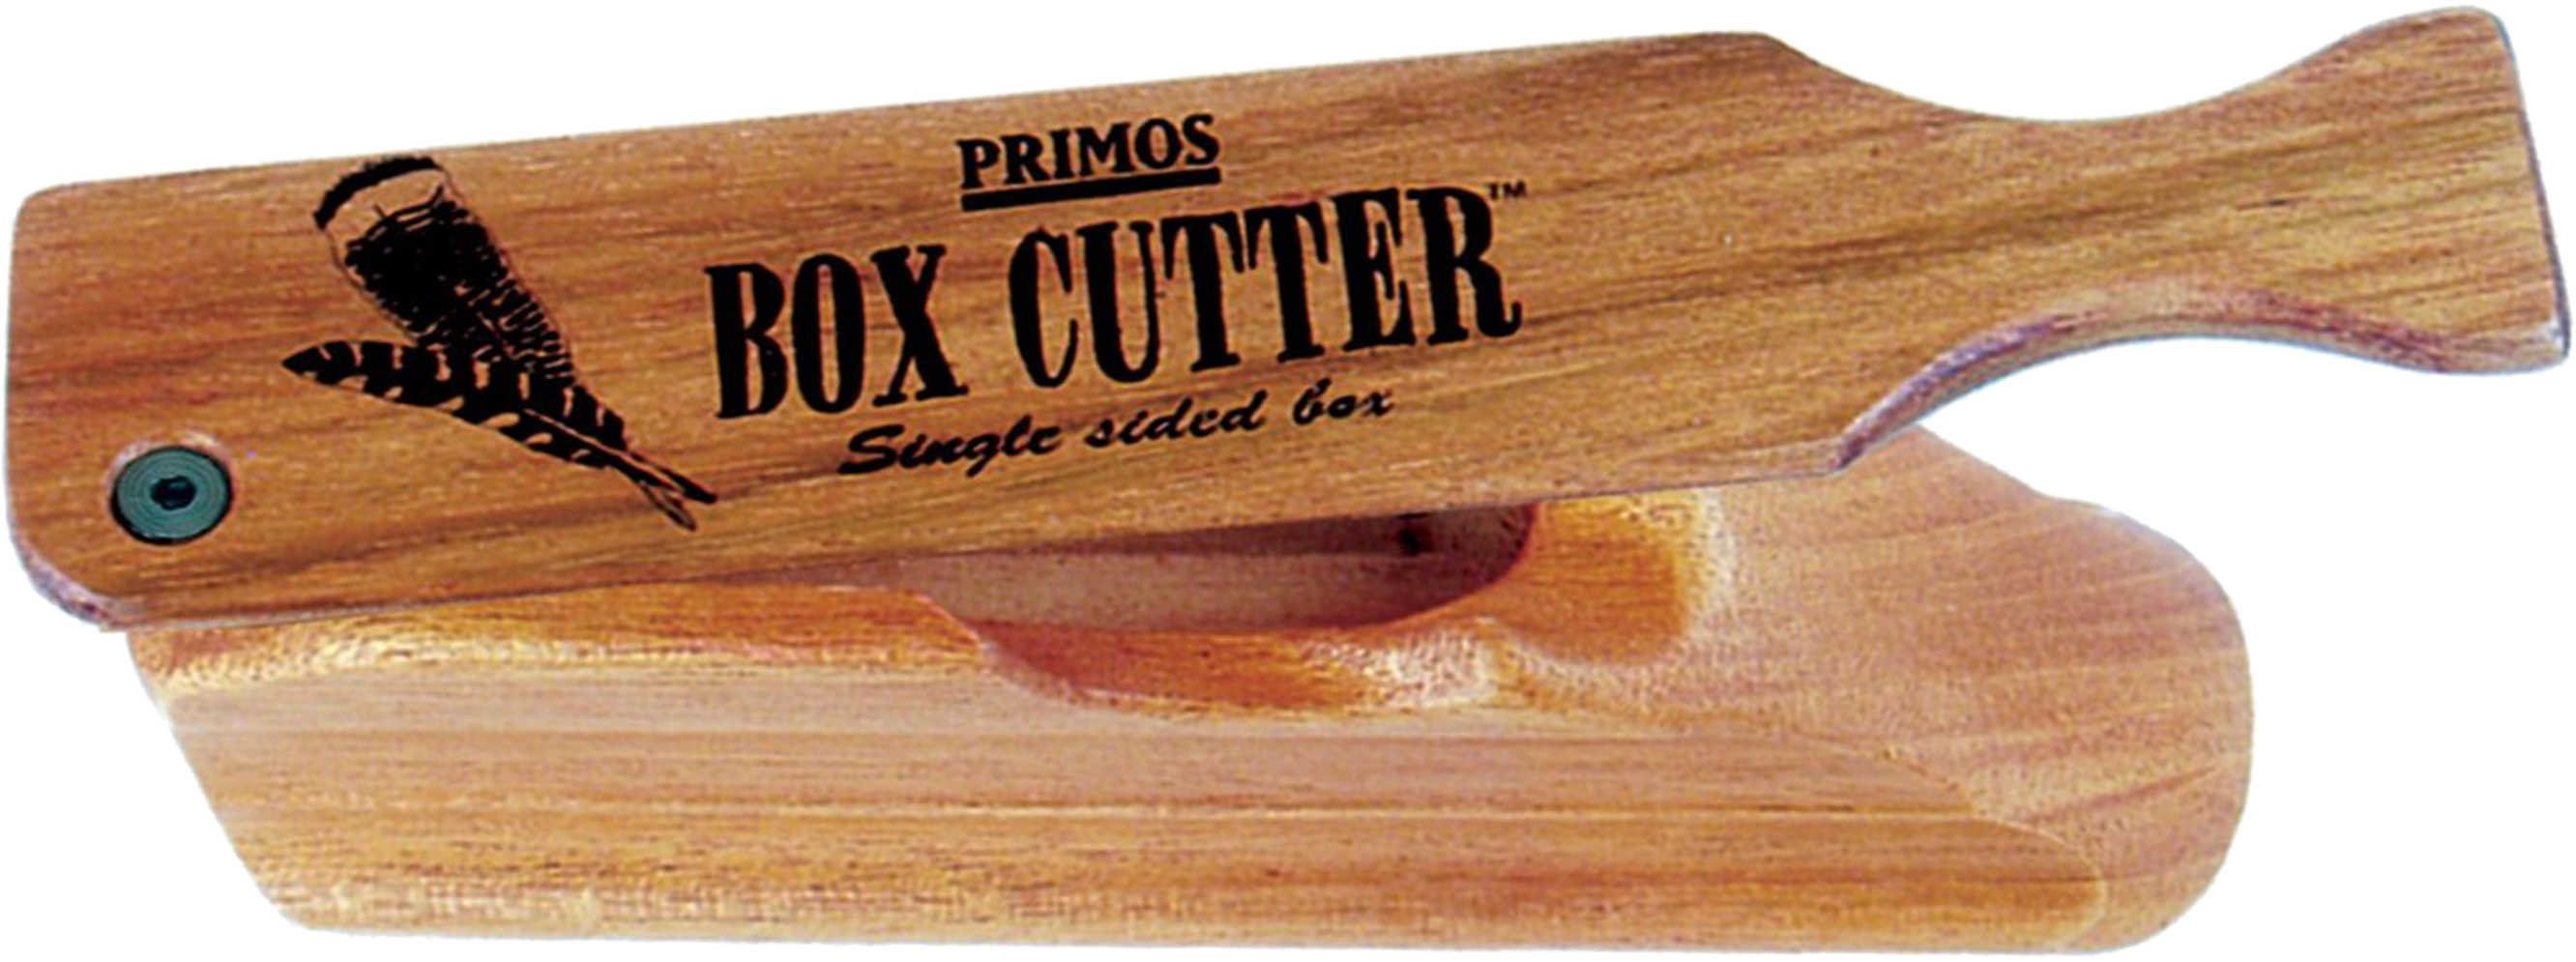 Primos Box Cutter Turkey Call